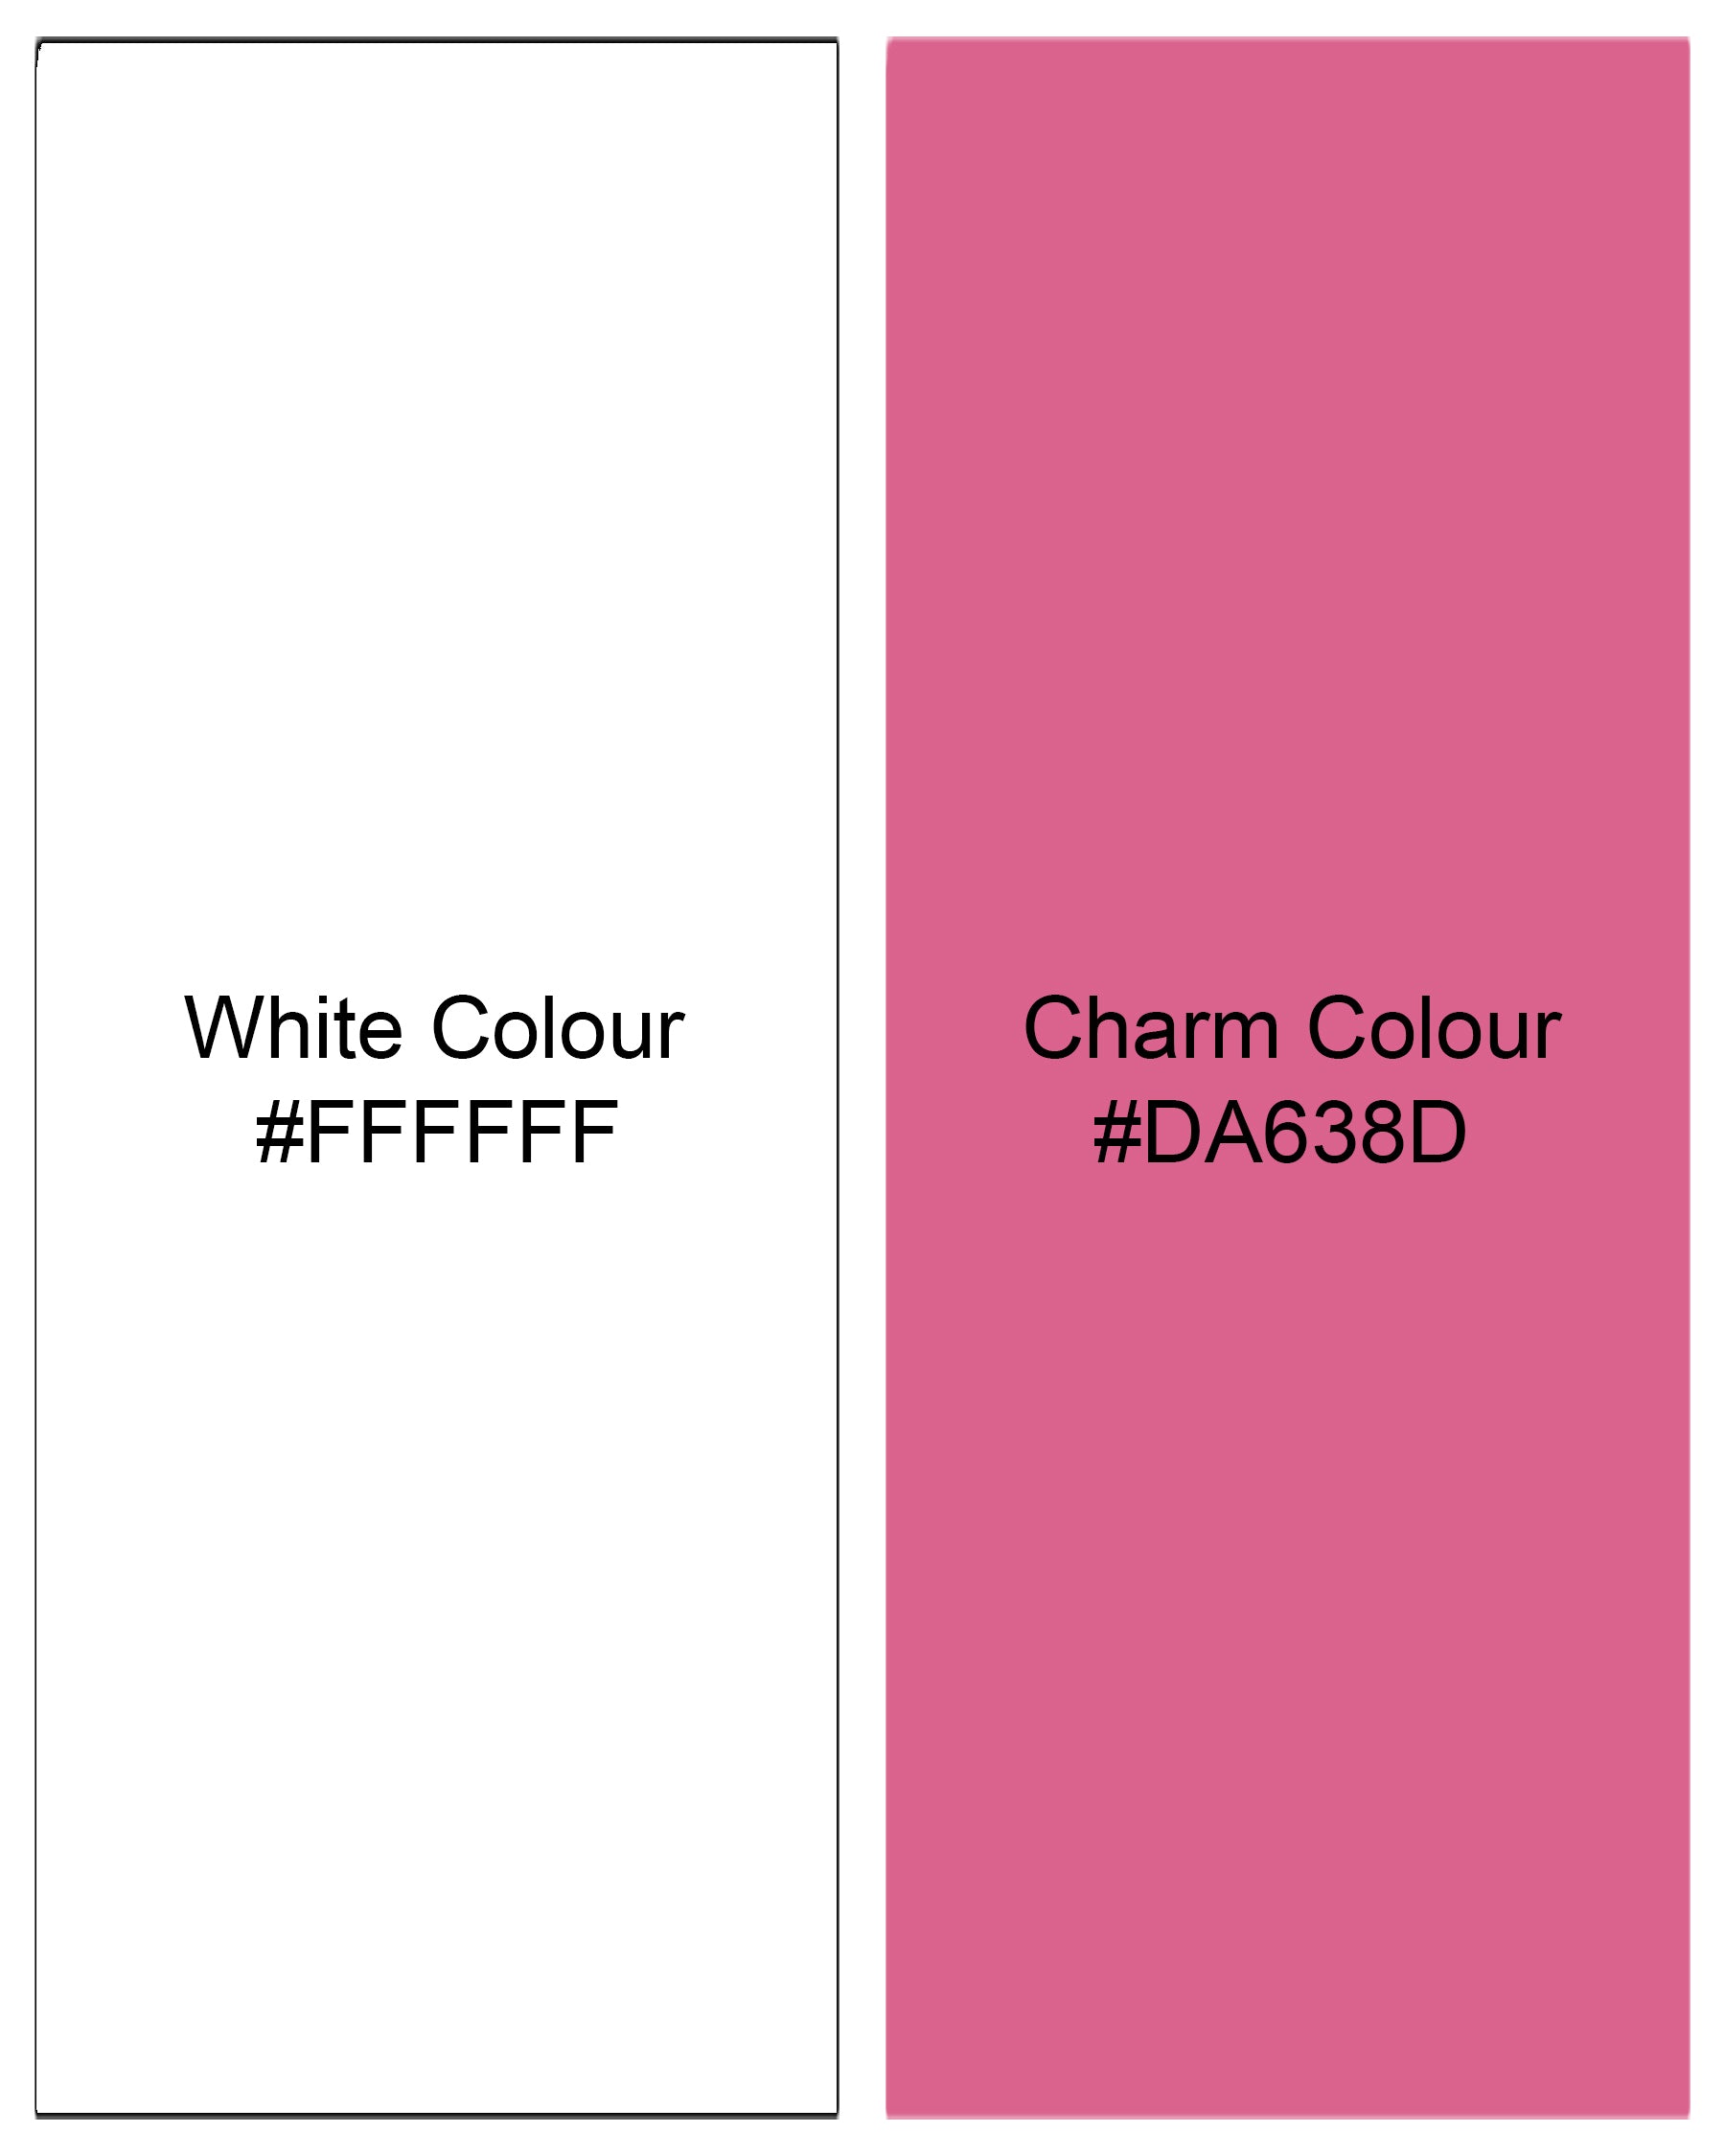 Bright White With Charm Pink Ditzy Floral Printed Luxurious Linen Kurta Shirt 7936-KS-38, 7936-KS-H-38, 7936-KS-39, 7936-KS-H-39, 7936-KS-40, 7936-KS-H-40, 7936-KS-42, 7936-KS-H-42, 7936-KS-44, 7936-KS-H-44, 7936-KS-46, 7936-KS-H-46, 7936-KS-48, 7936-KS-H-48, 7936-KS-50, 7936-KS-H-50, 7936-KS-52, 7936-KS-H-52